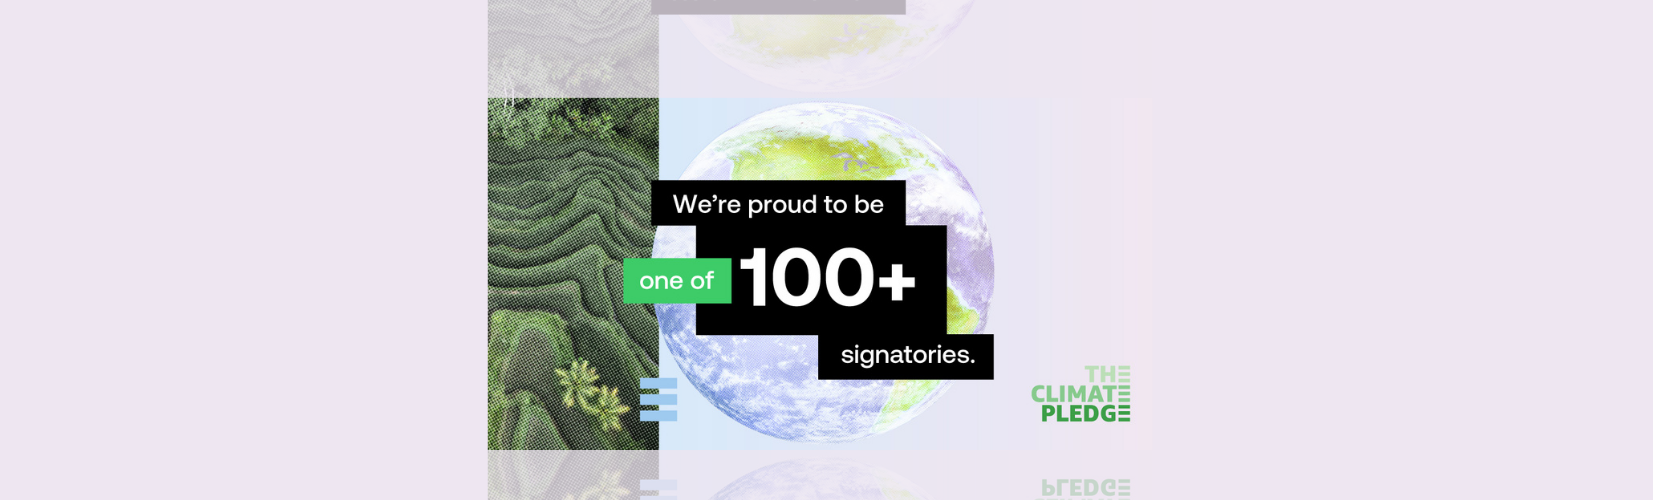 The Climate Pledge - 100+ Signatories